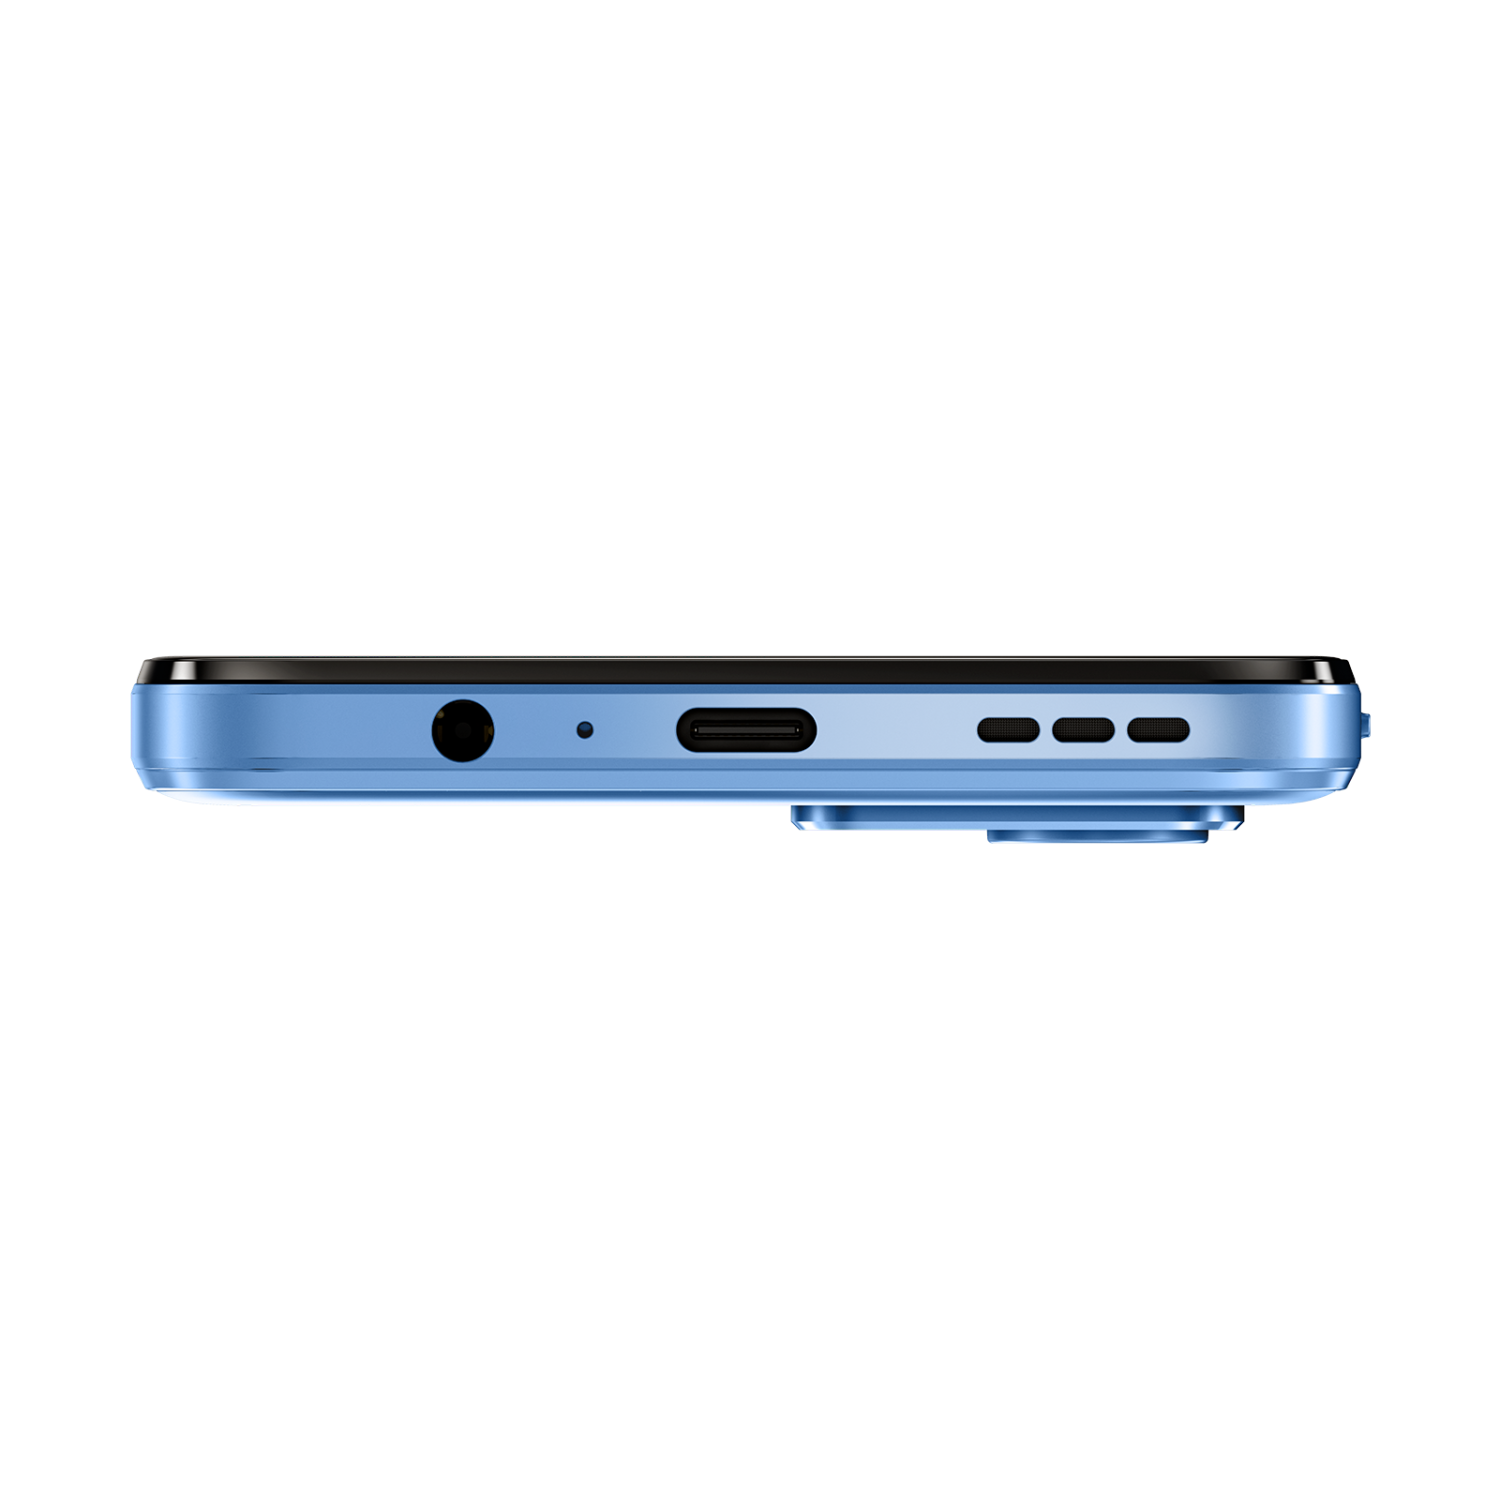 Motorola Moto G54 5G Power Edition 12GB/256 GB Pearl Blue